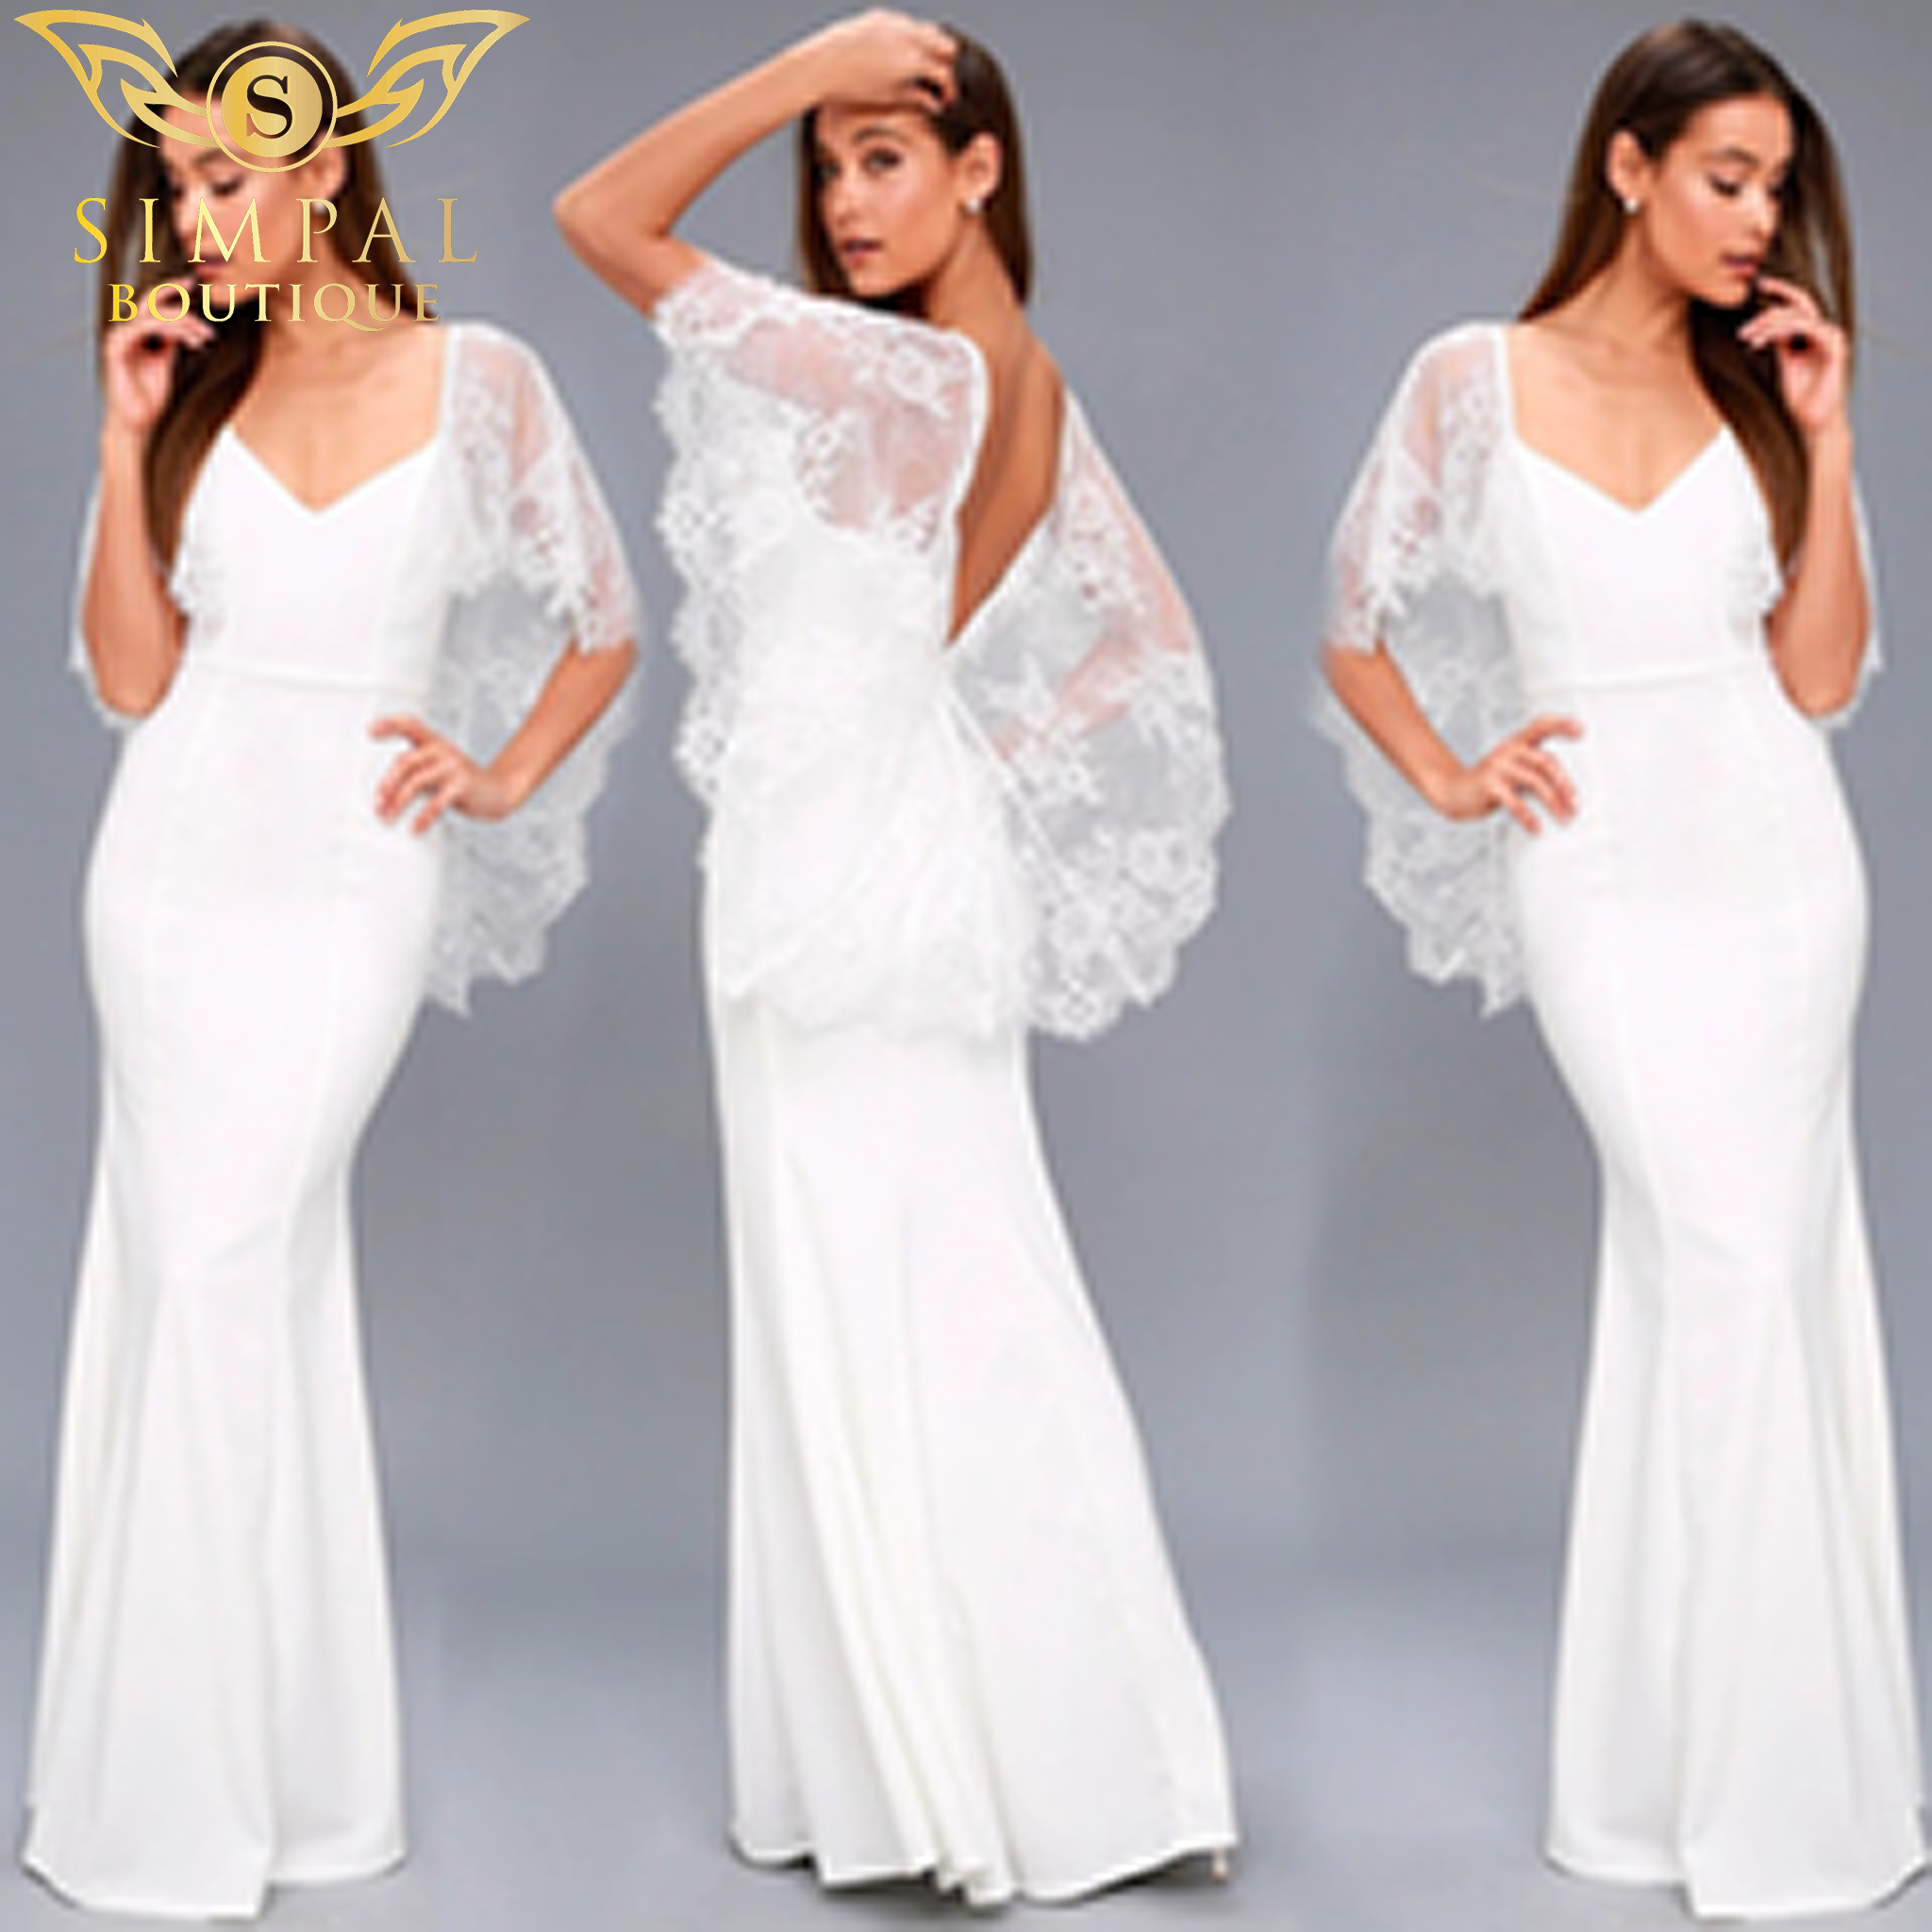 In Store Reez Beautiful Lace Shoulder Long White Flowy Wedding Beach Dress